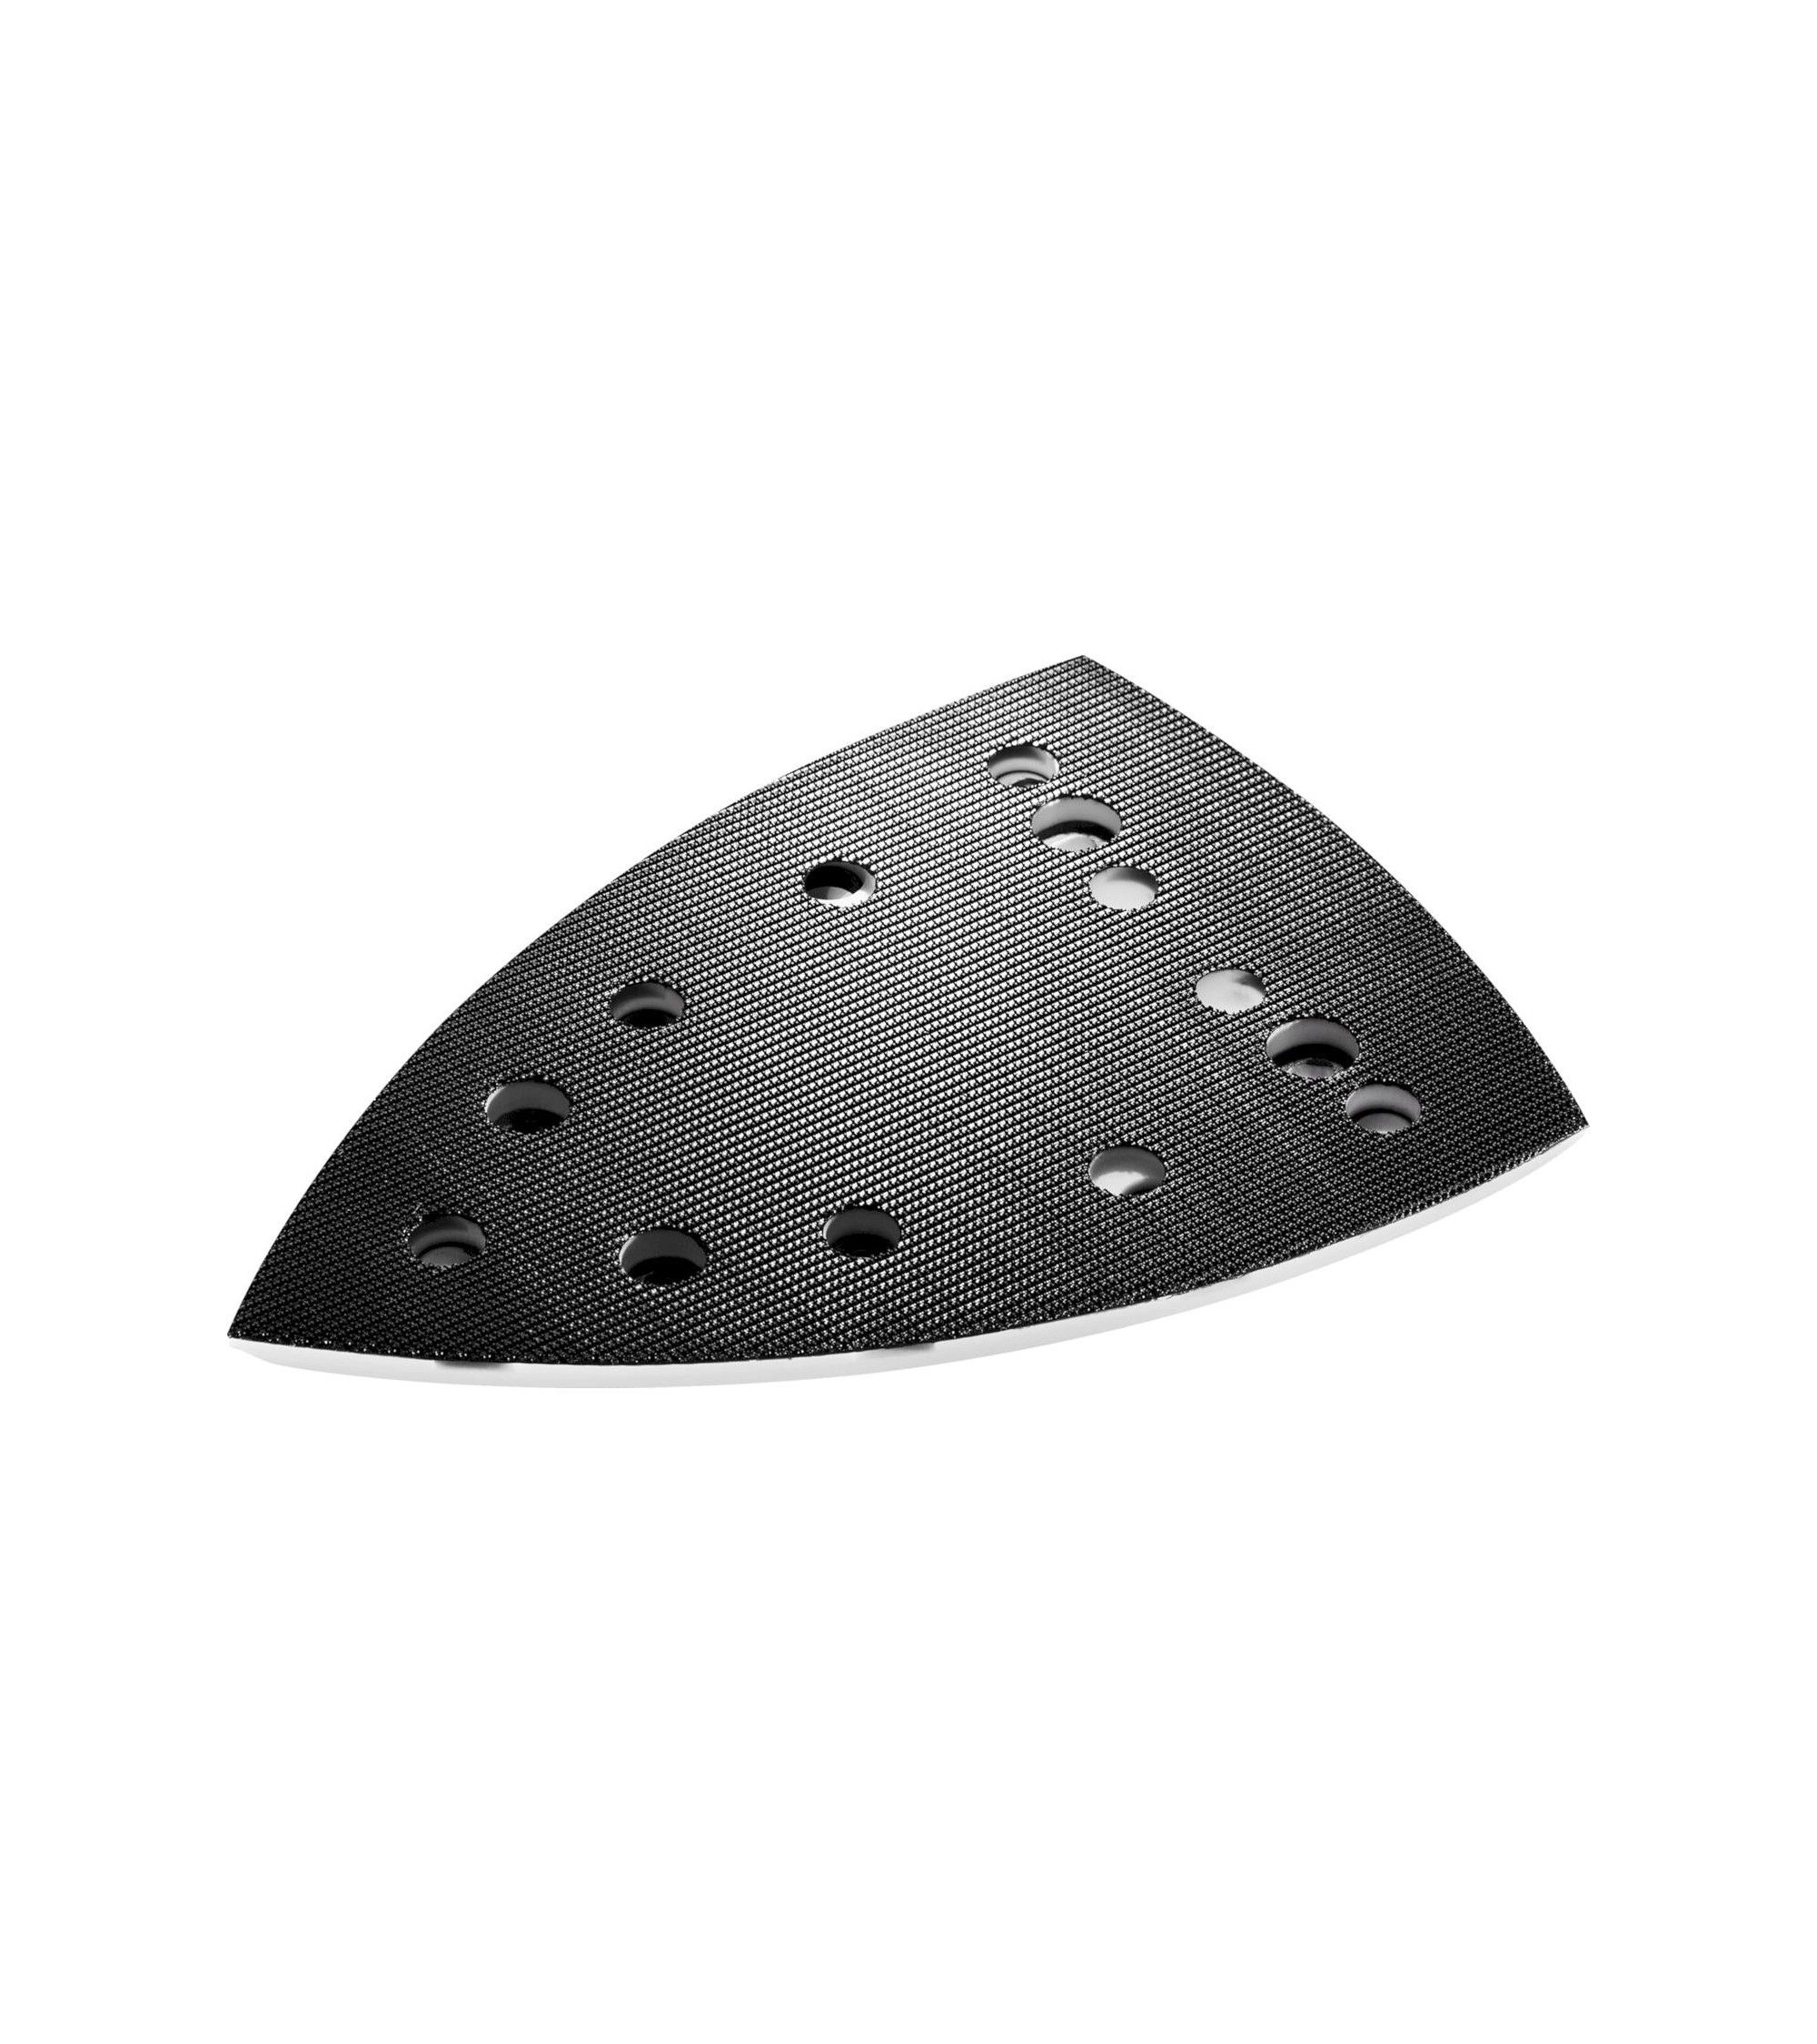 Festool Sanding pad SSH-STF DELTA/9, KAINA BE PVM: 32.49, KODAS: 577530 | 001